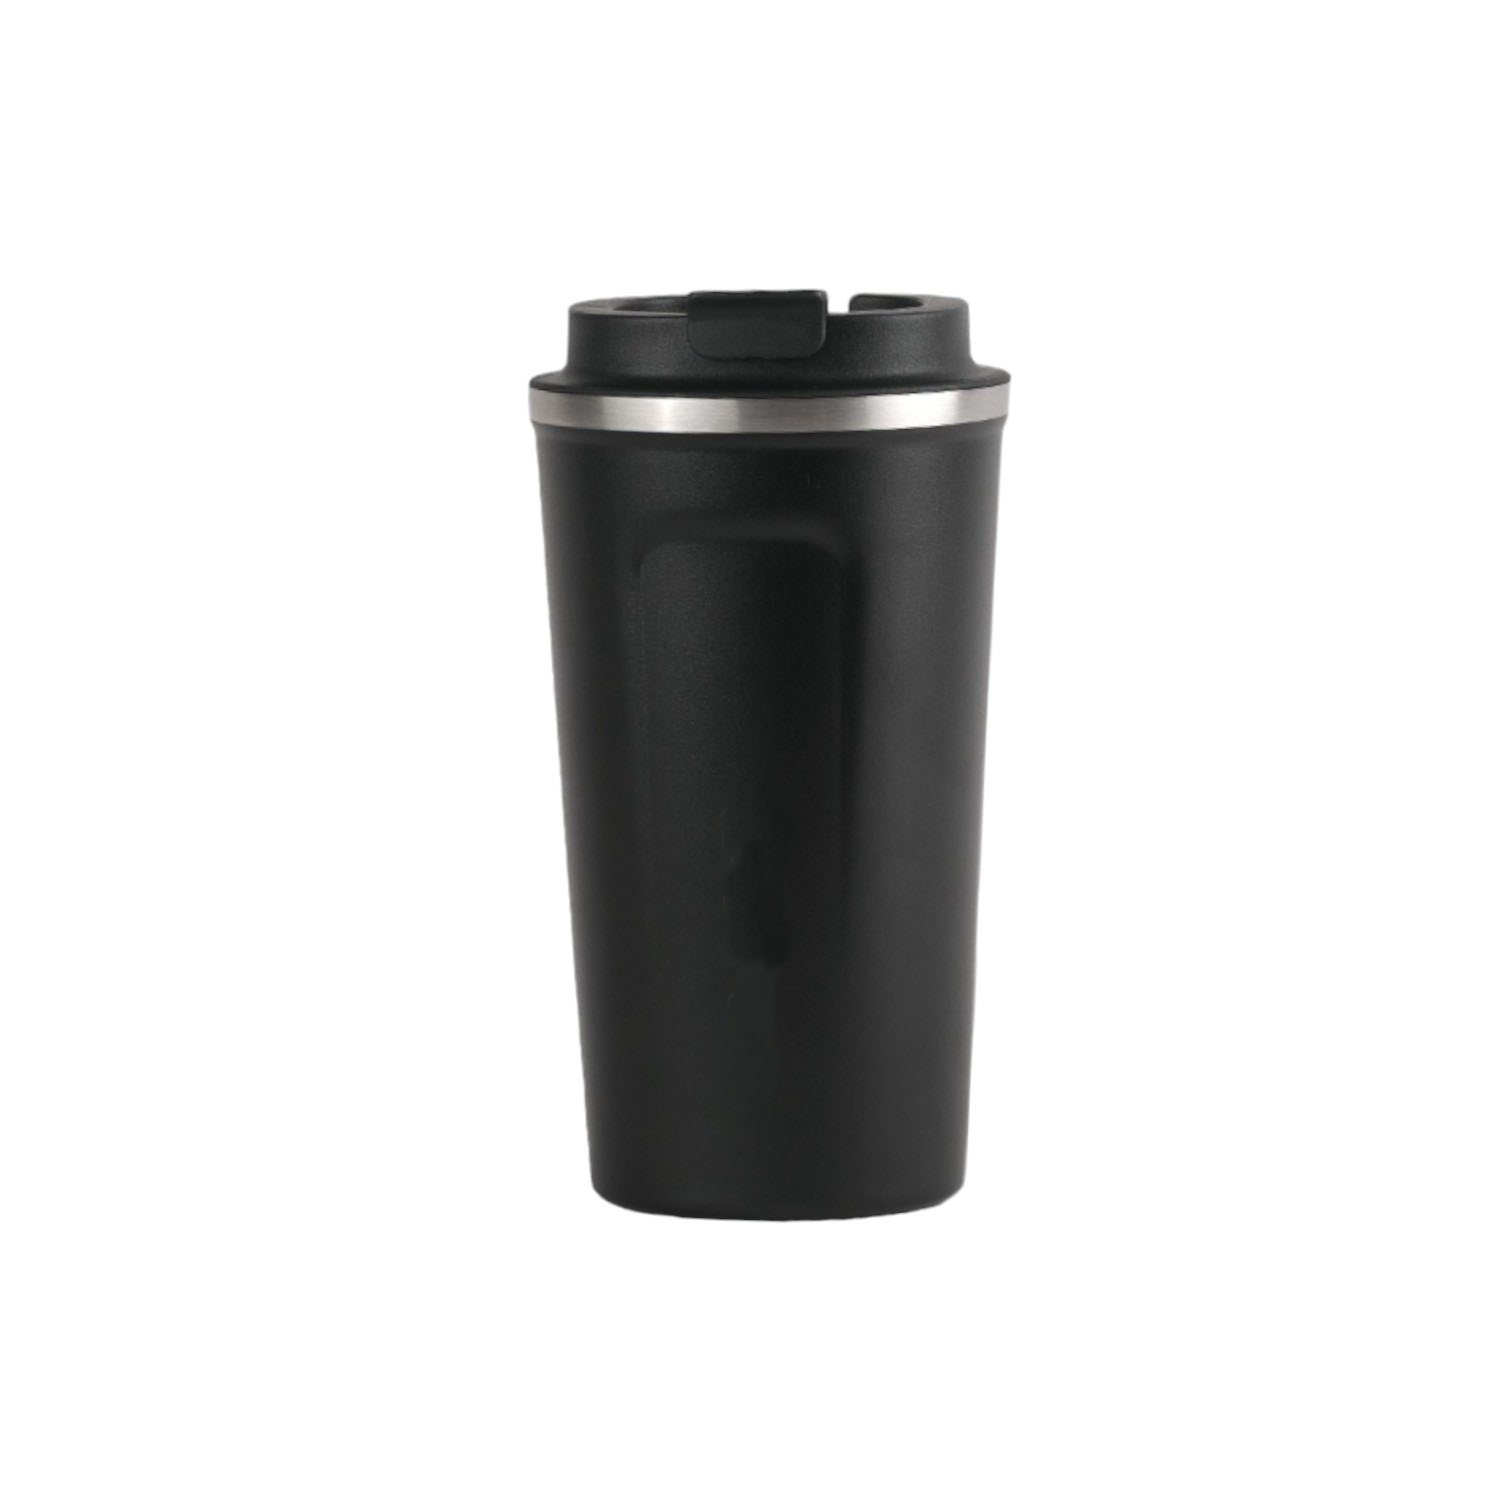 17oz Competitive Stainless Steel Coffee Mug